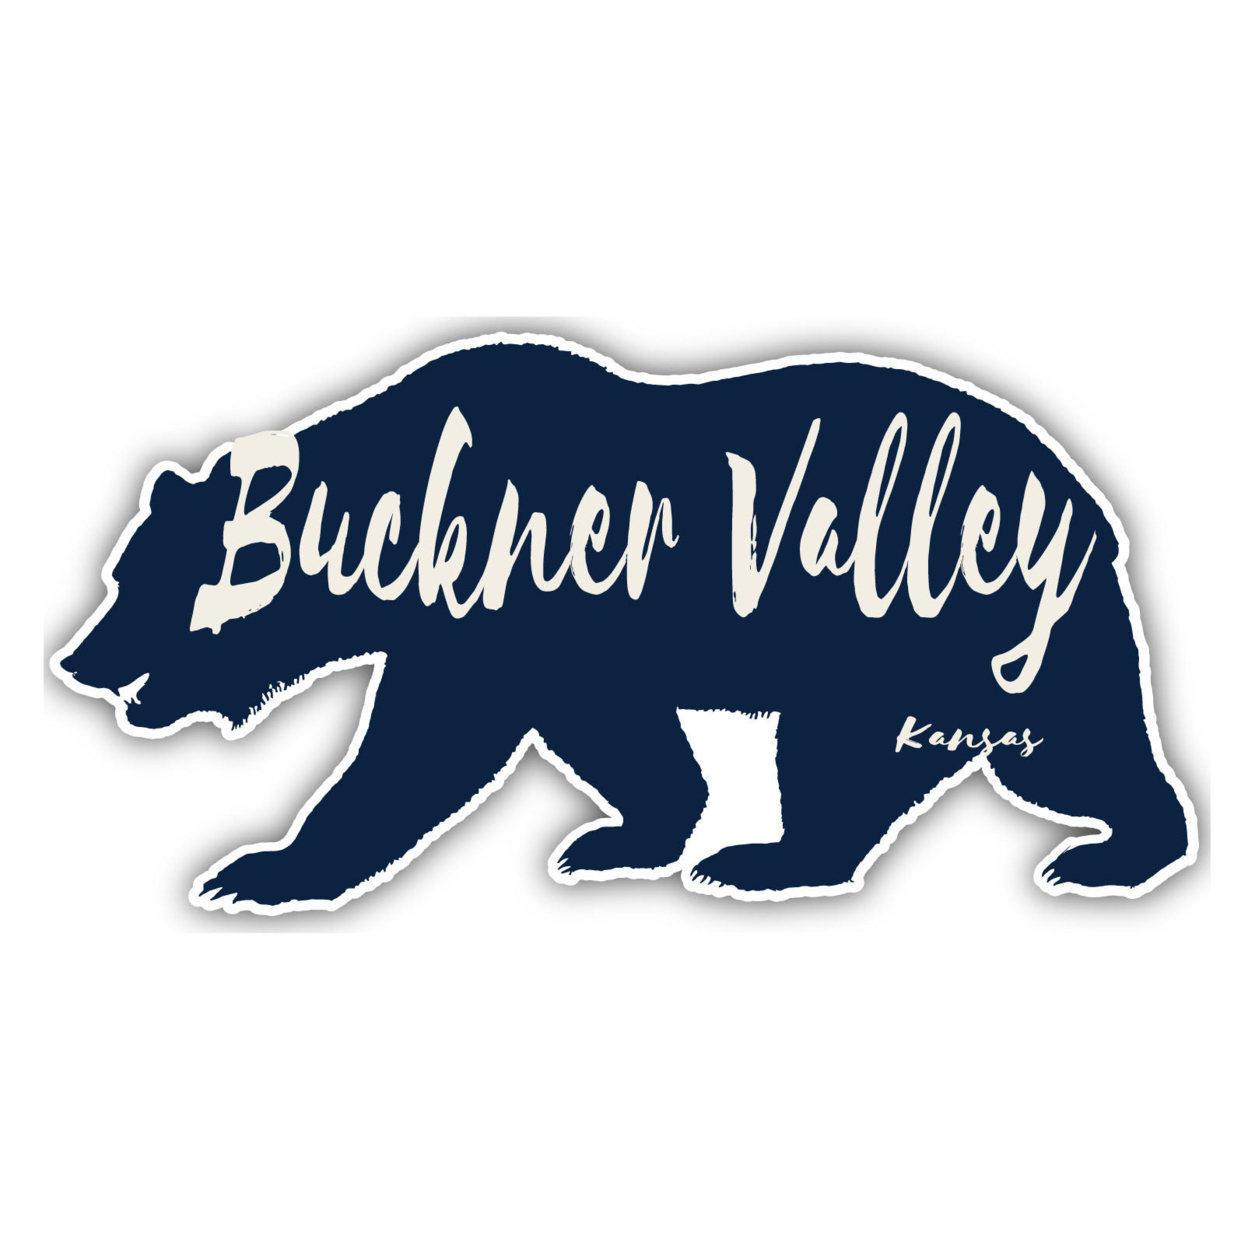 Buckner Valley Kansas Souvenir Decorative Stickers (Choose Theme And Size) - 4-Pack, 12-Inch, Bear